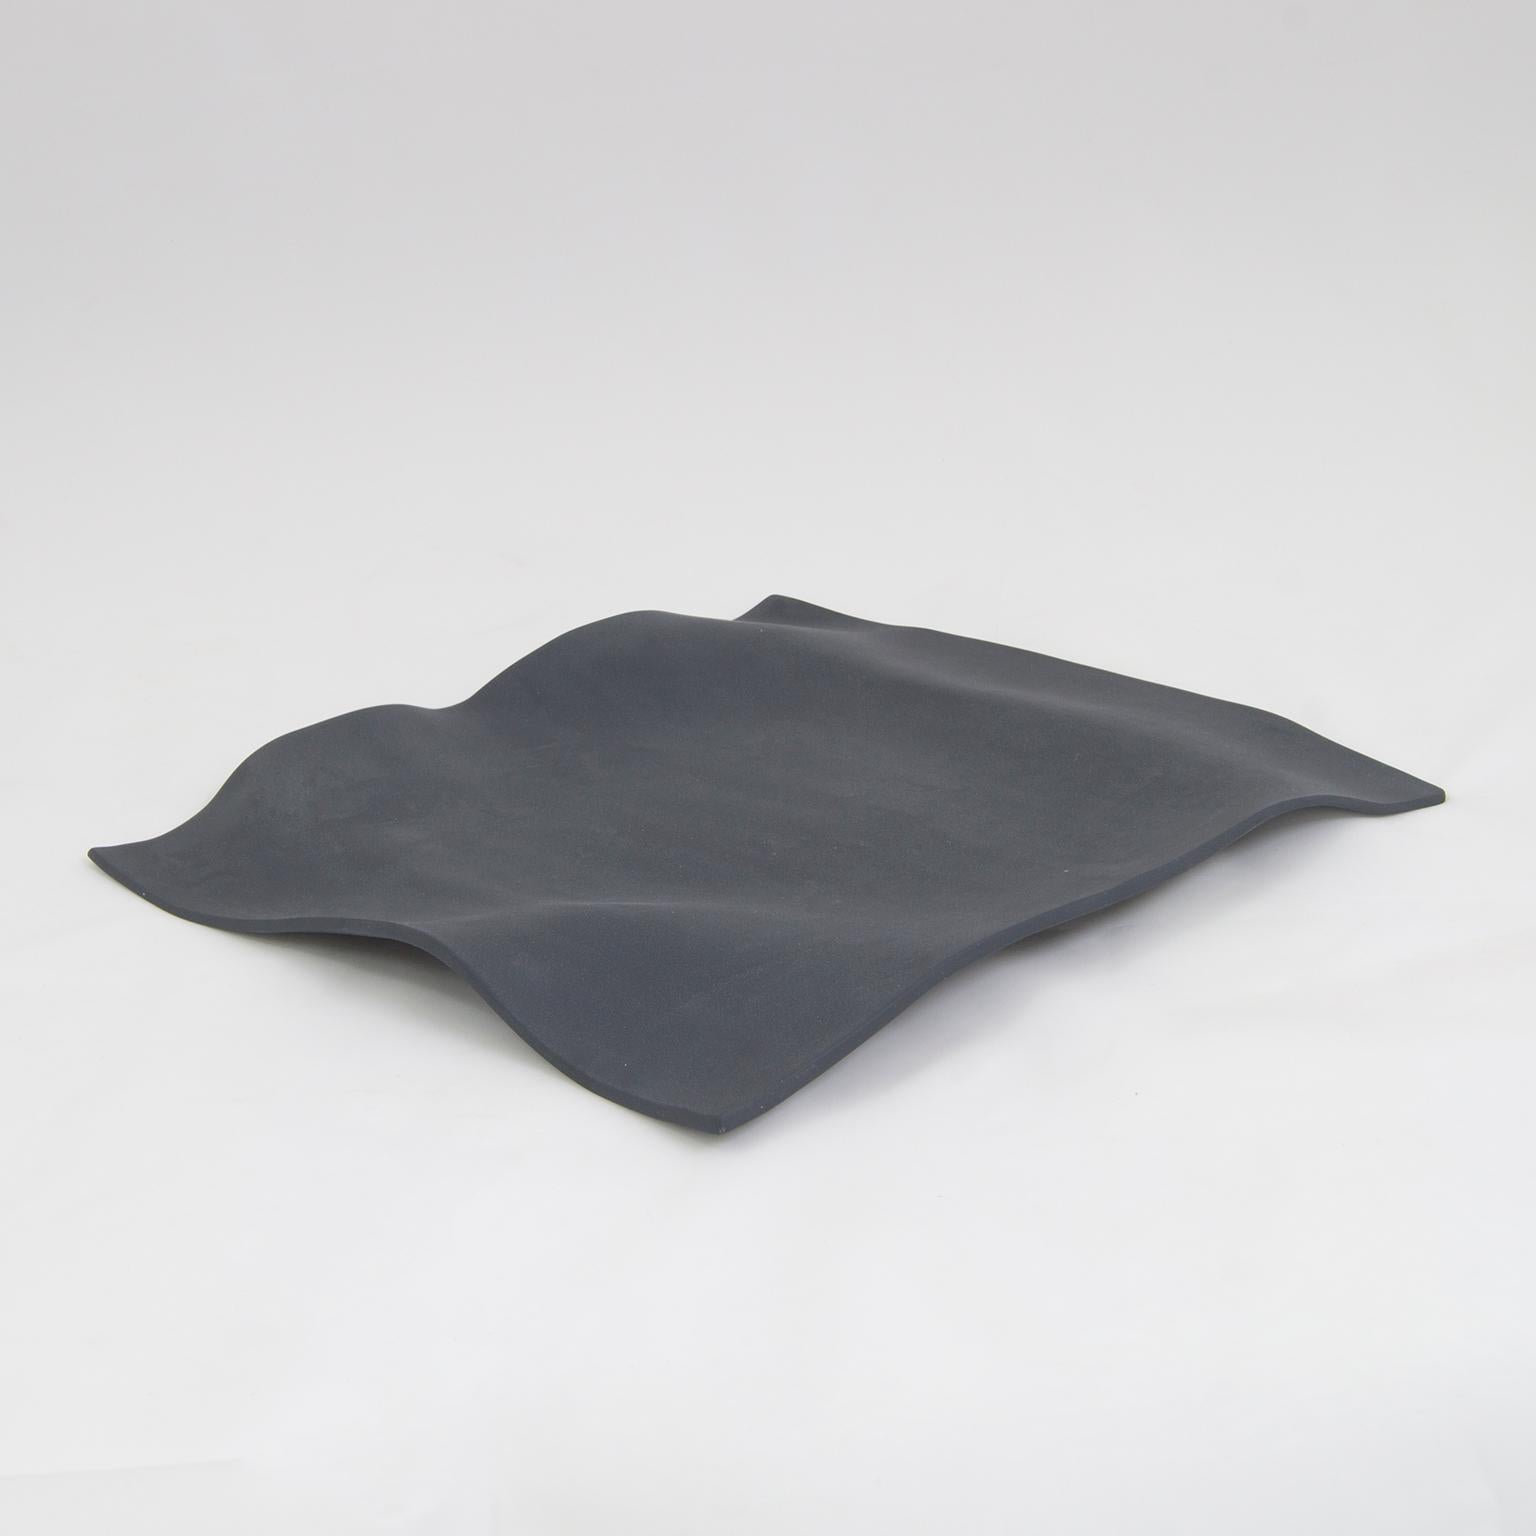 Mexican Handmade Paper Contemporary Decorative Object Matte Black Porcelain For Sale